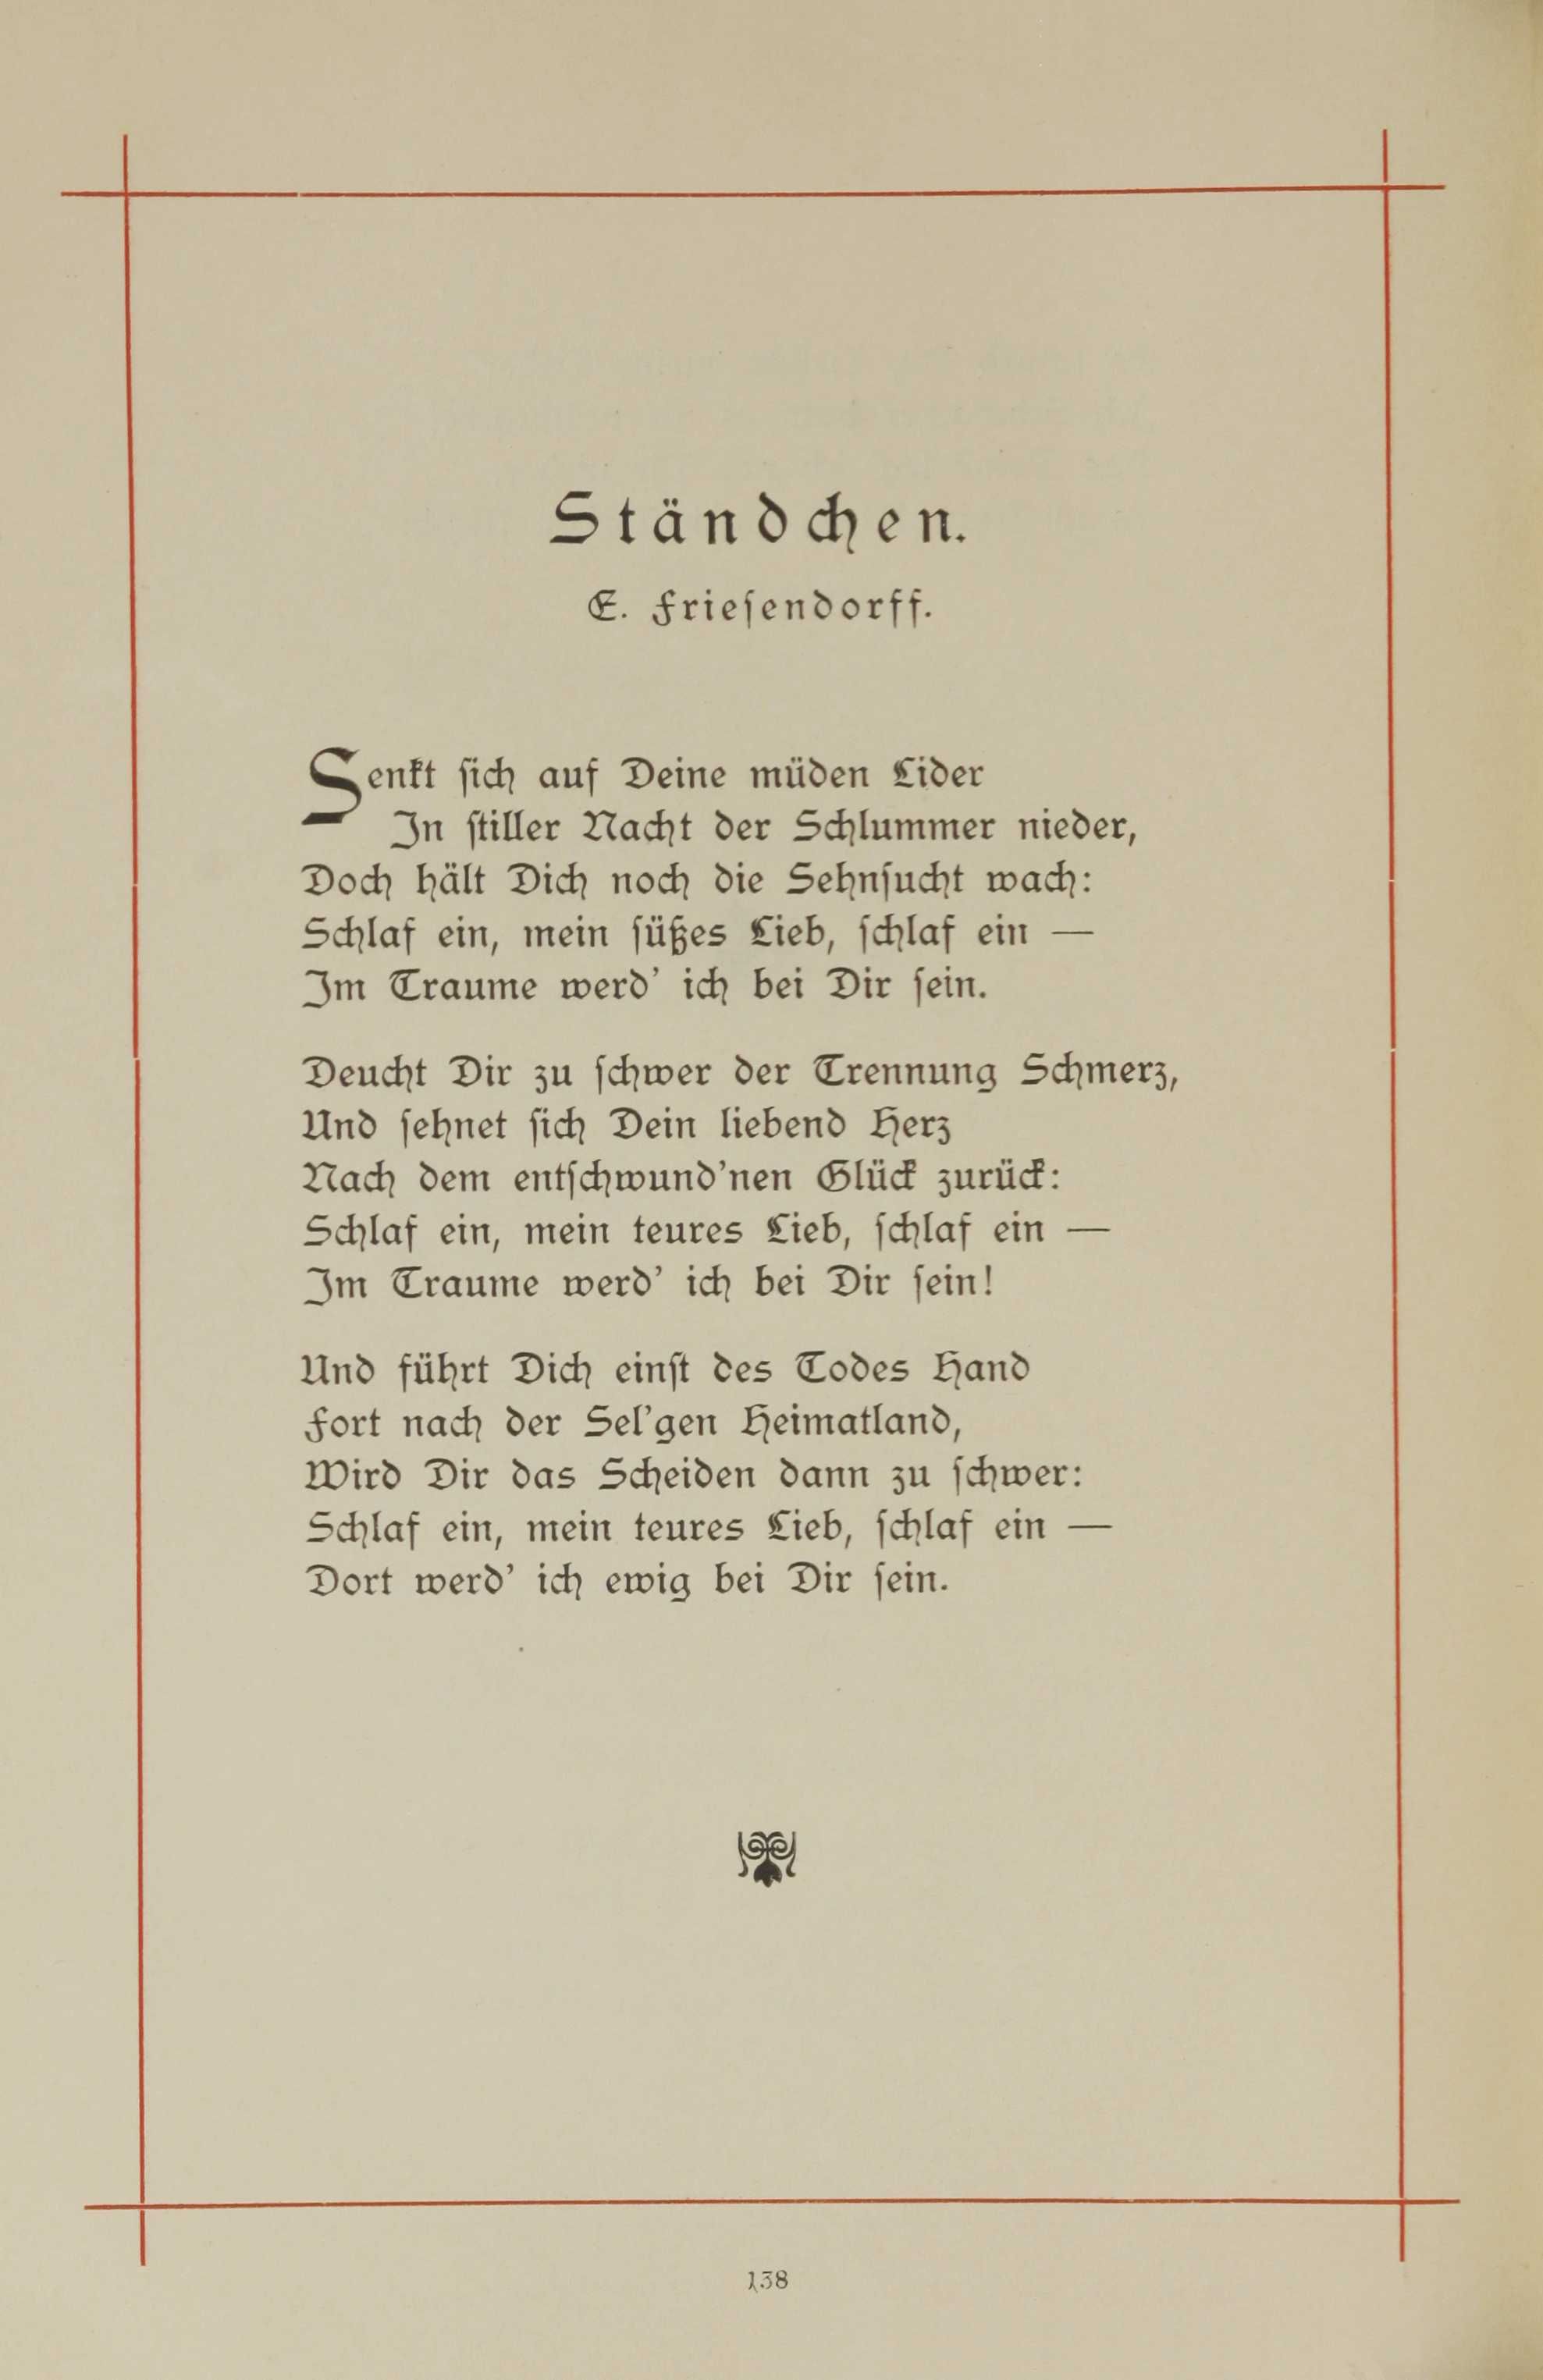 Erinnerung an die Fraternitas (1893) | 143. (138) Main body of text